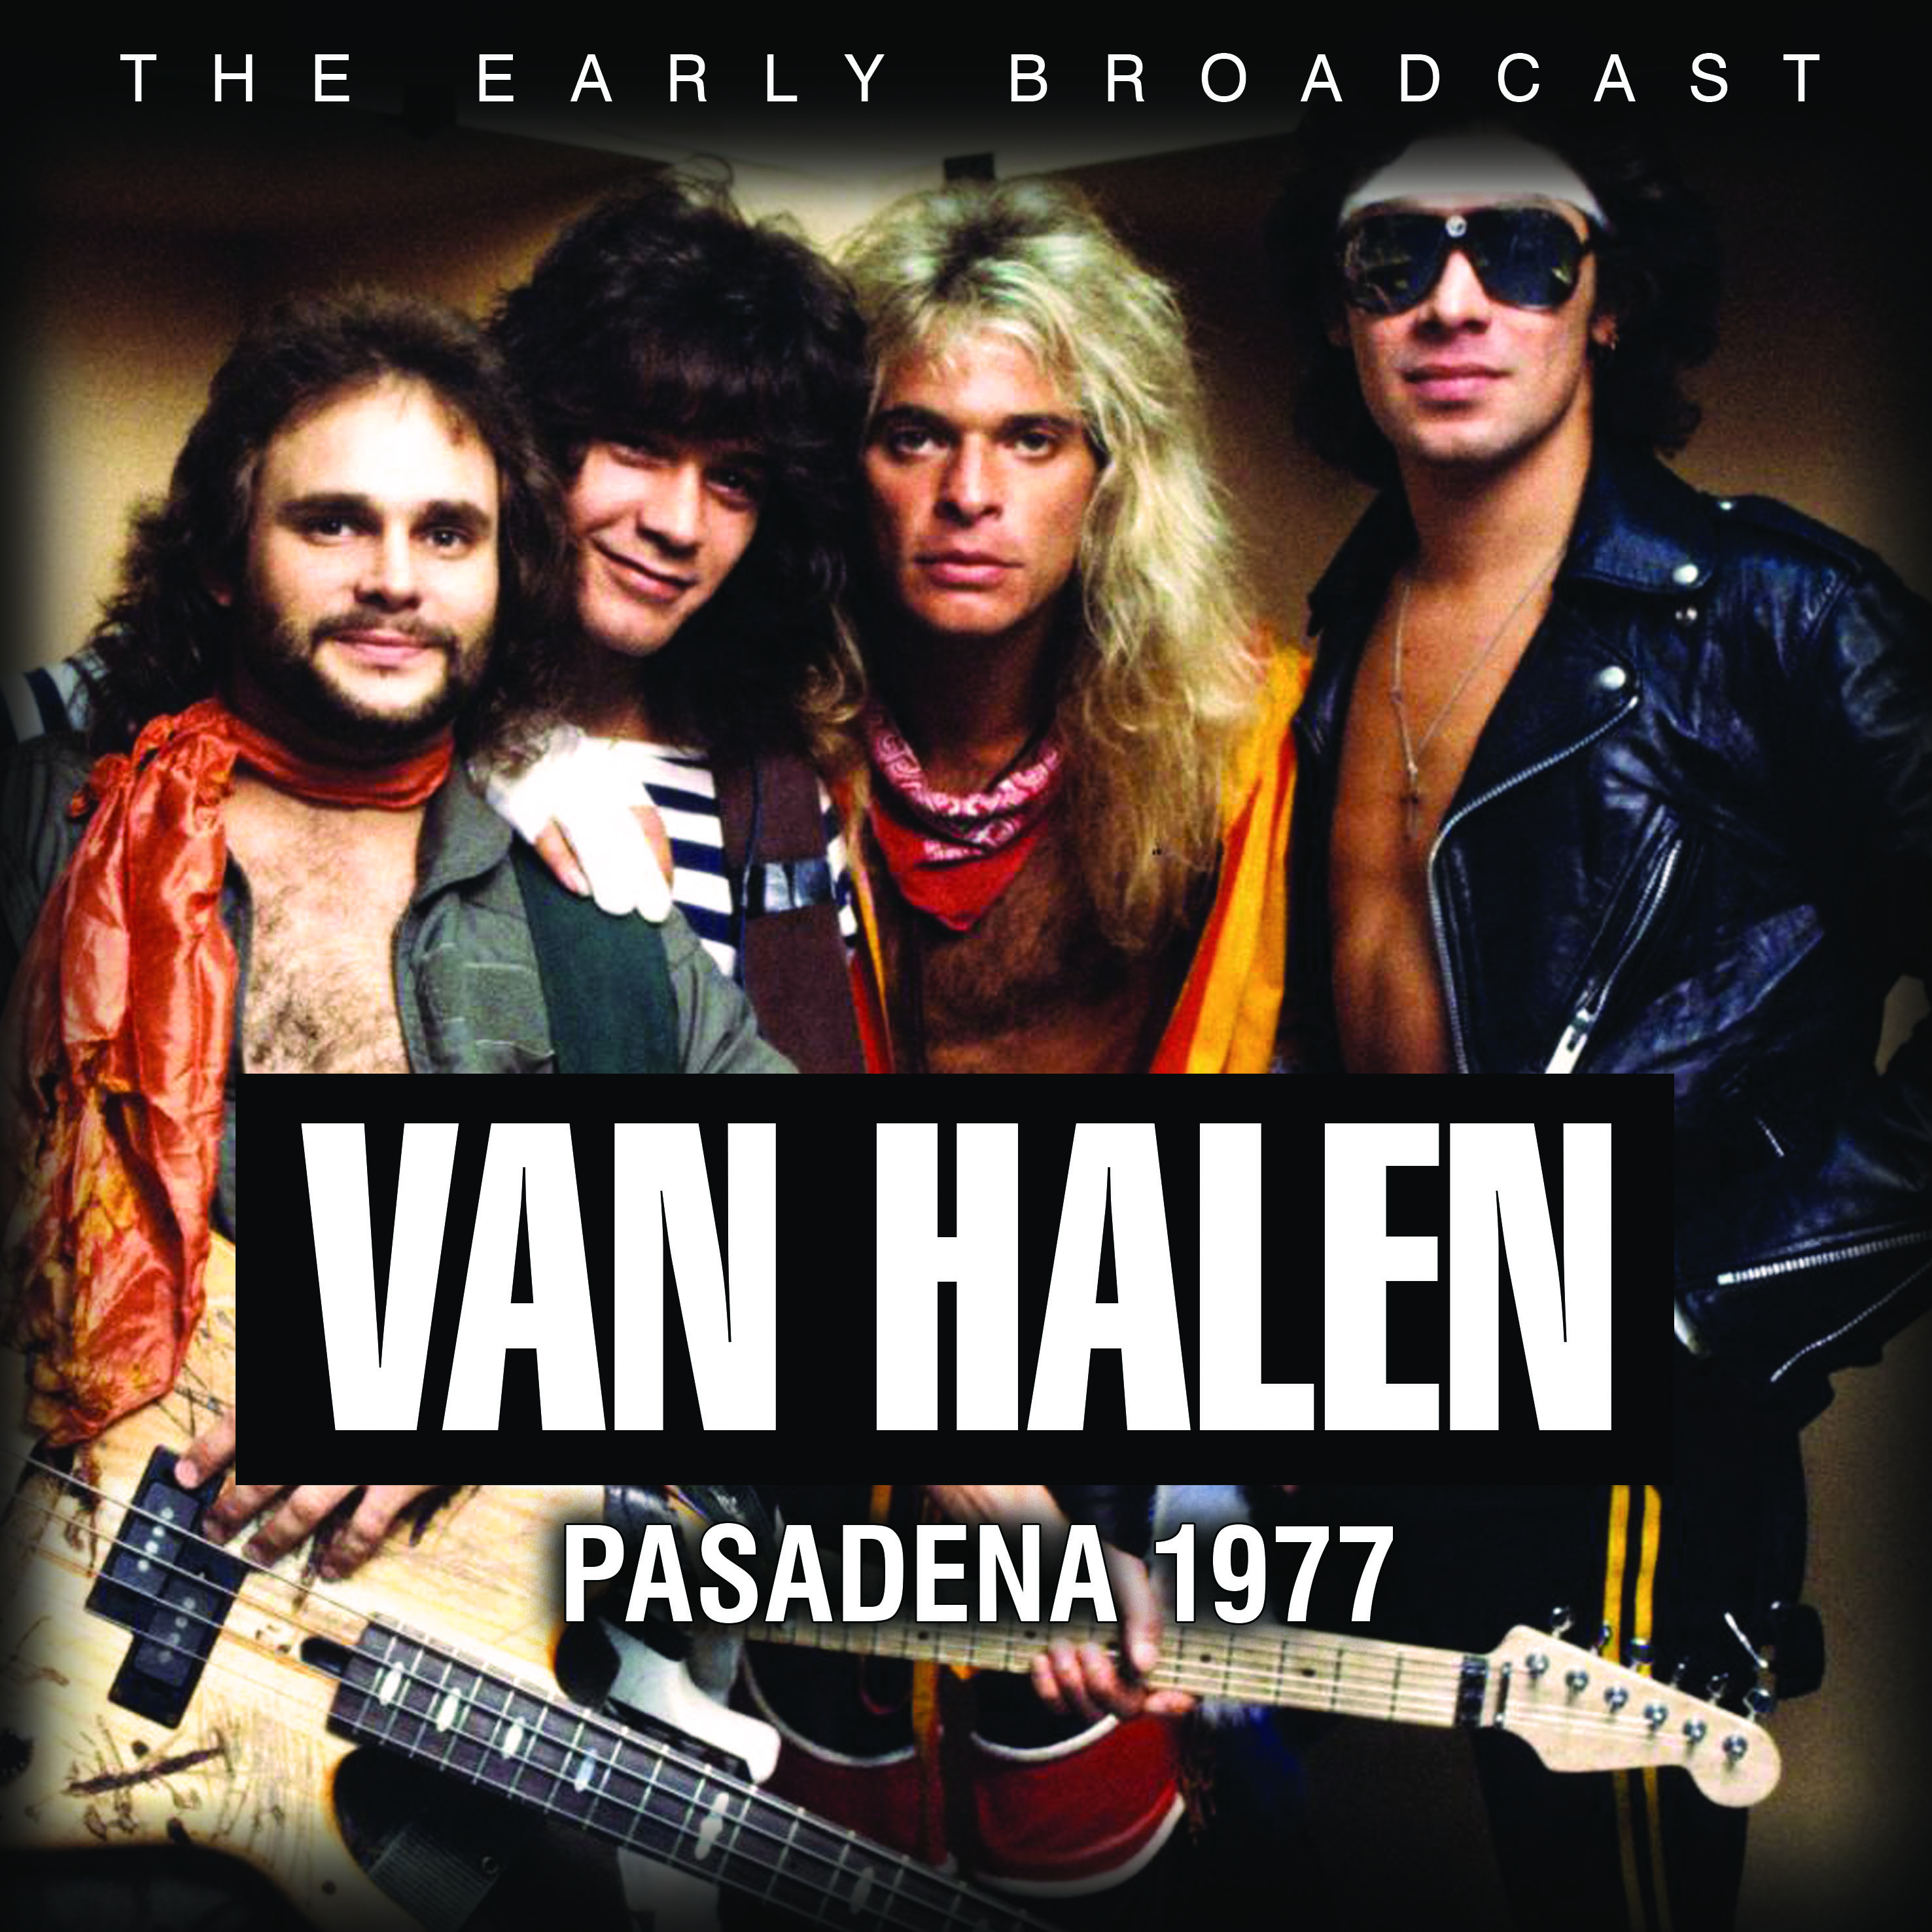 Van Halen Pasadena 1977 MVD Entertainment Group B2B